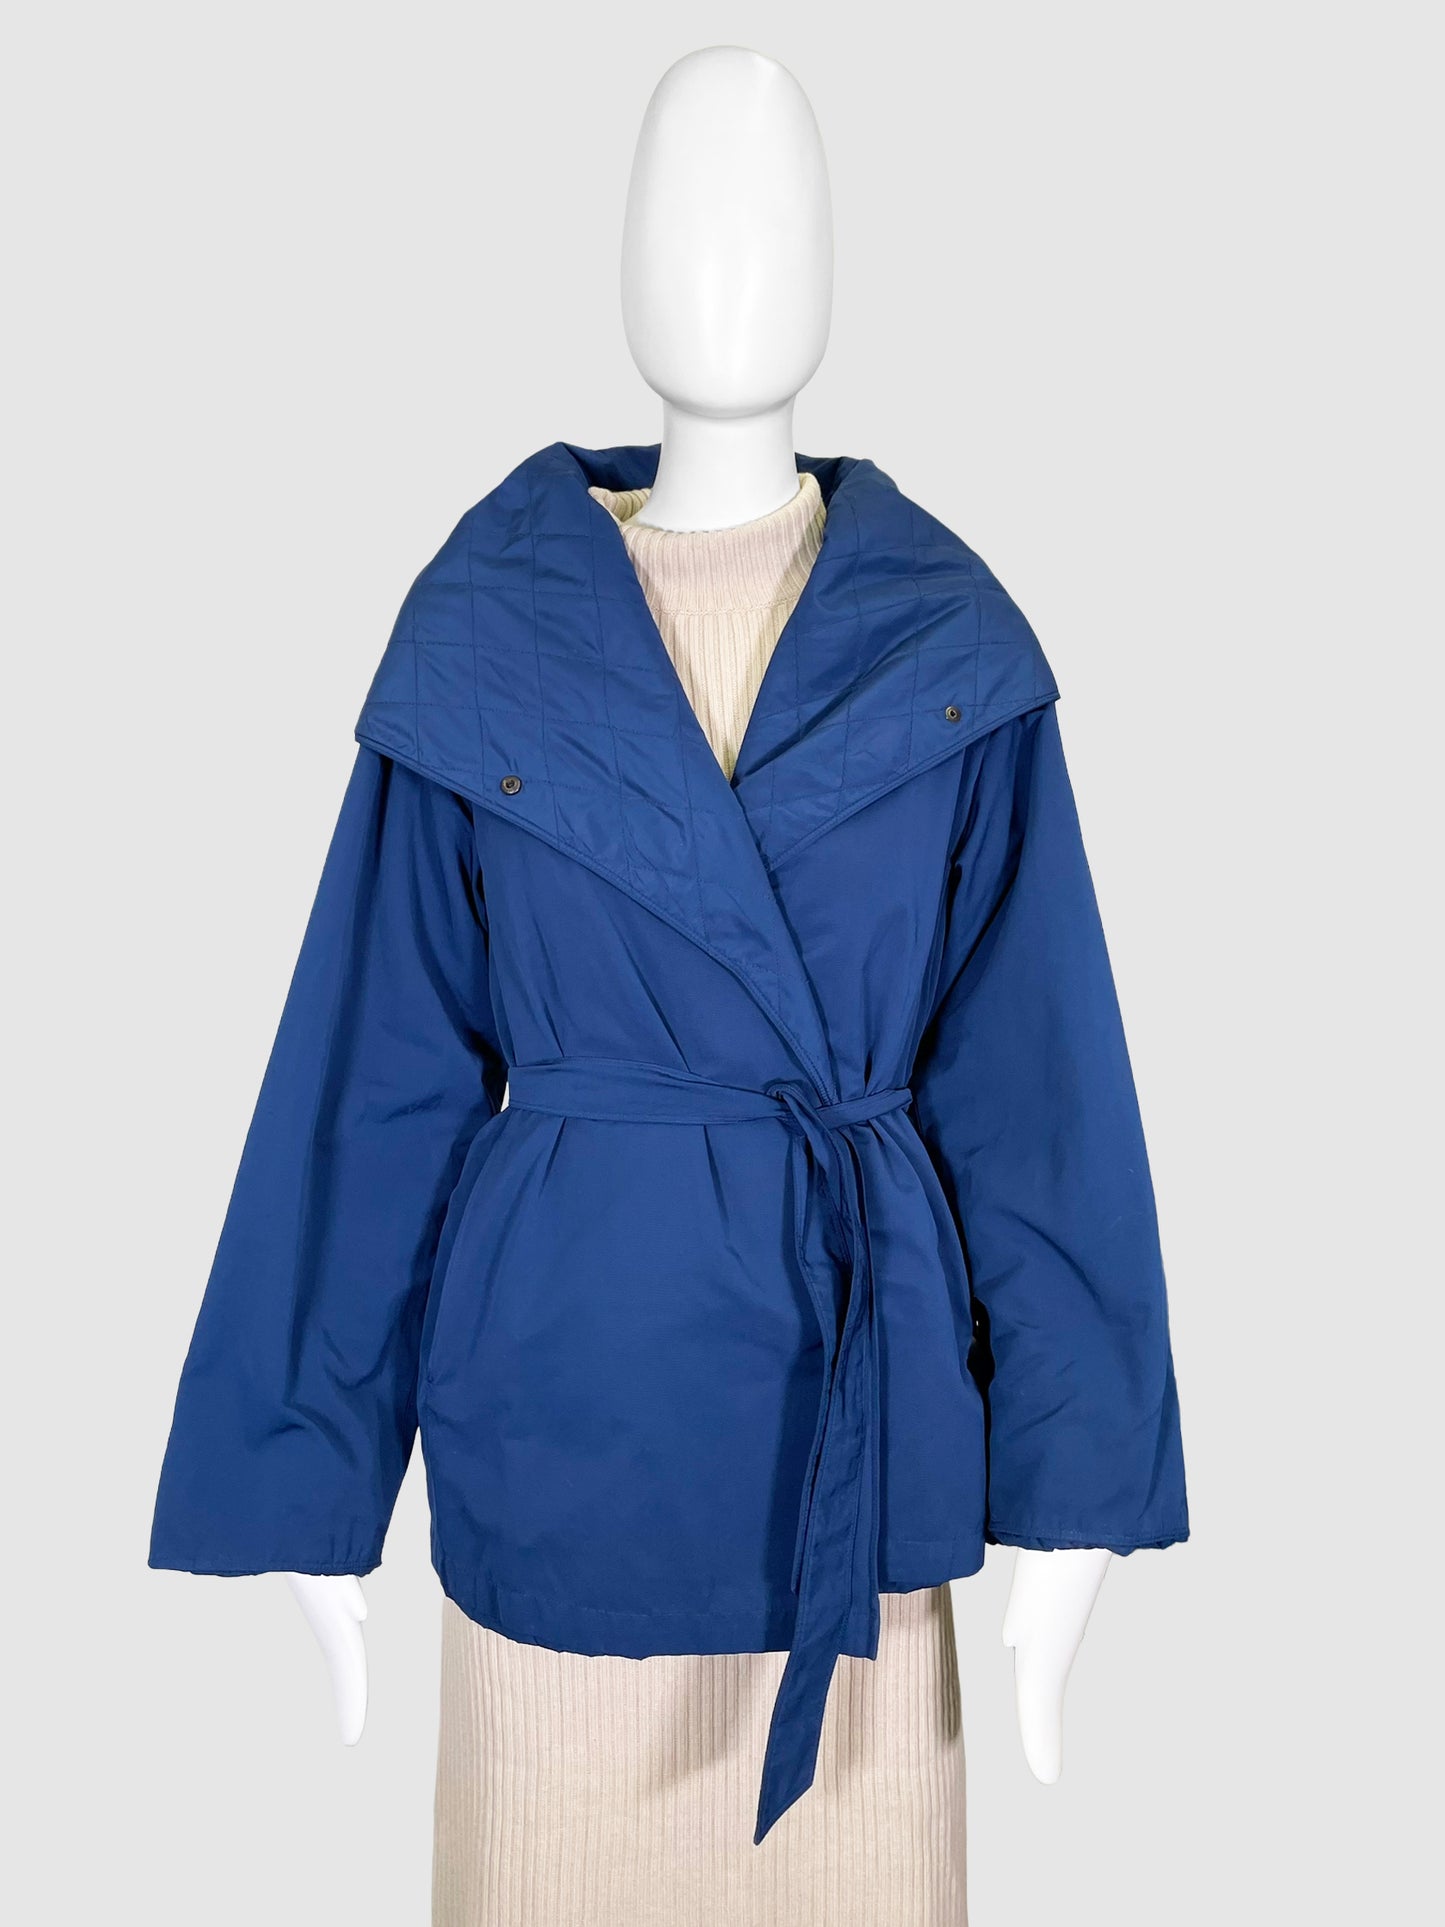 Max Mara Quilted Rain Jacket - Size 10